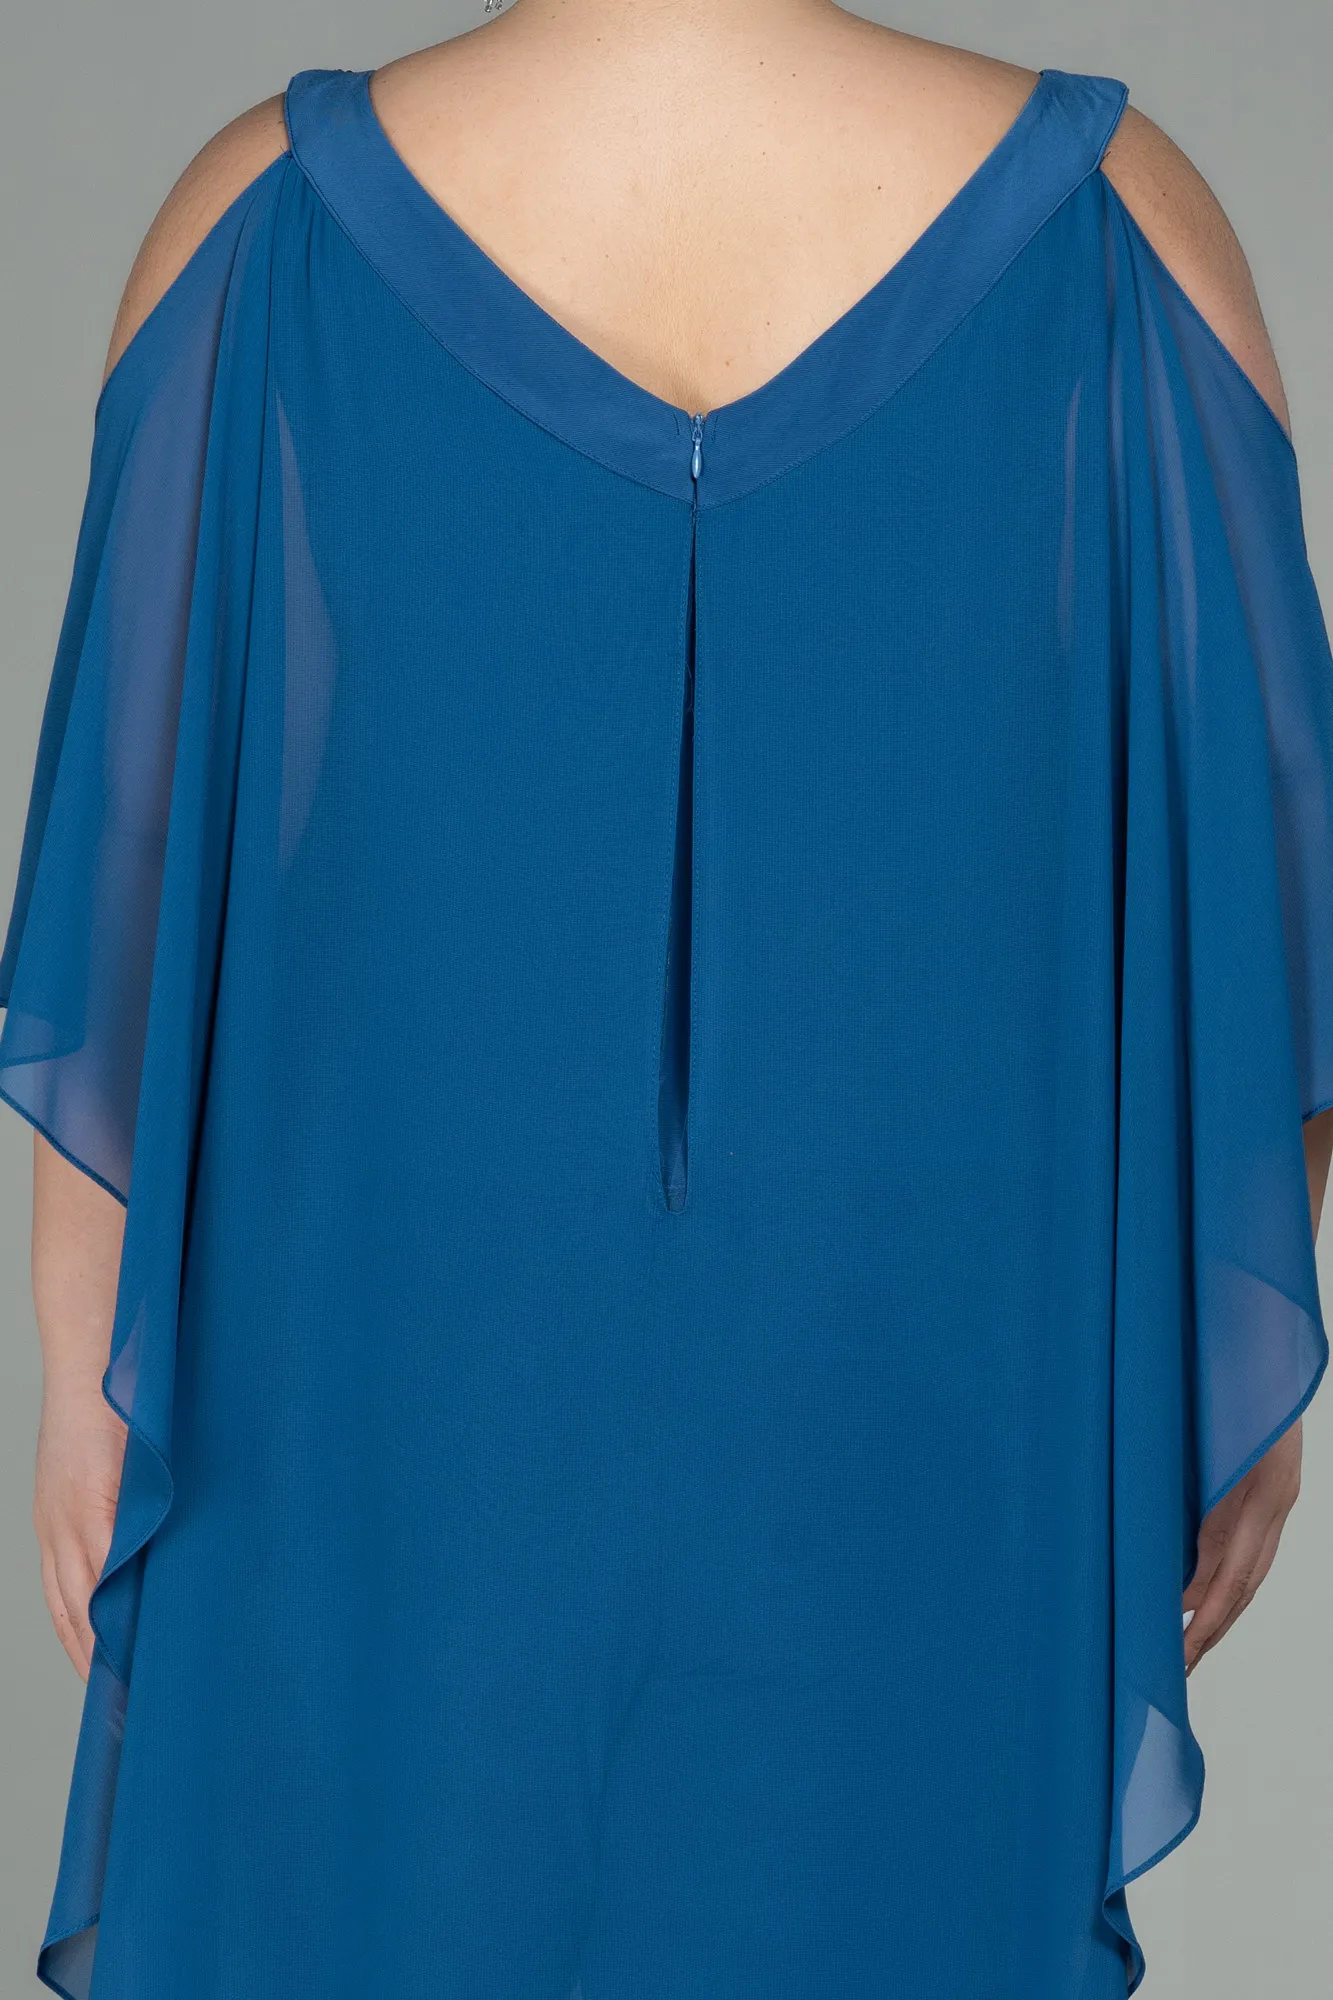 Indigo-Chiffon Plus Size Evening Dress ABT096